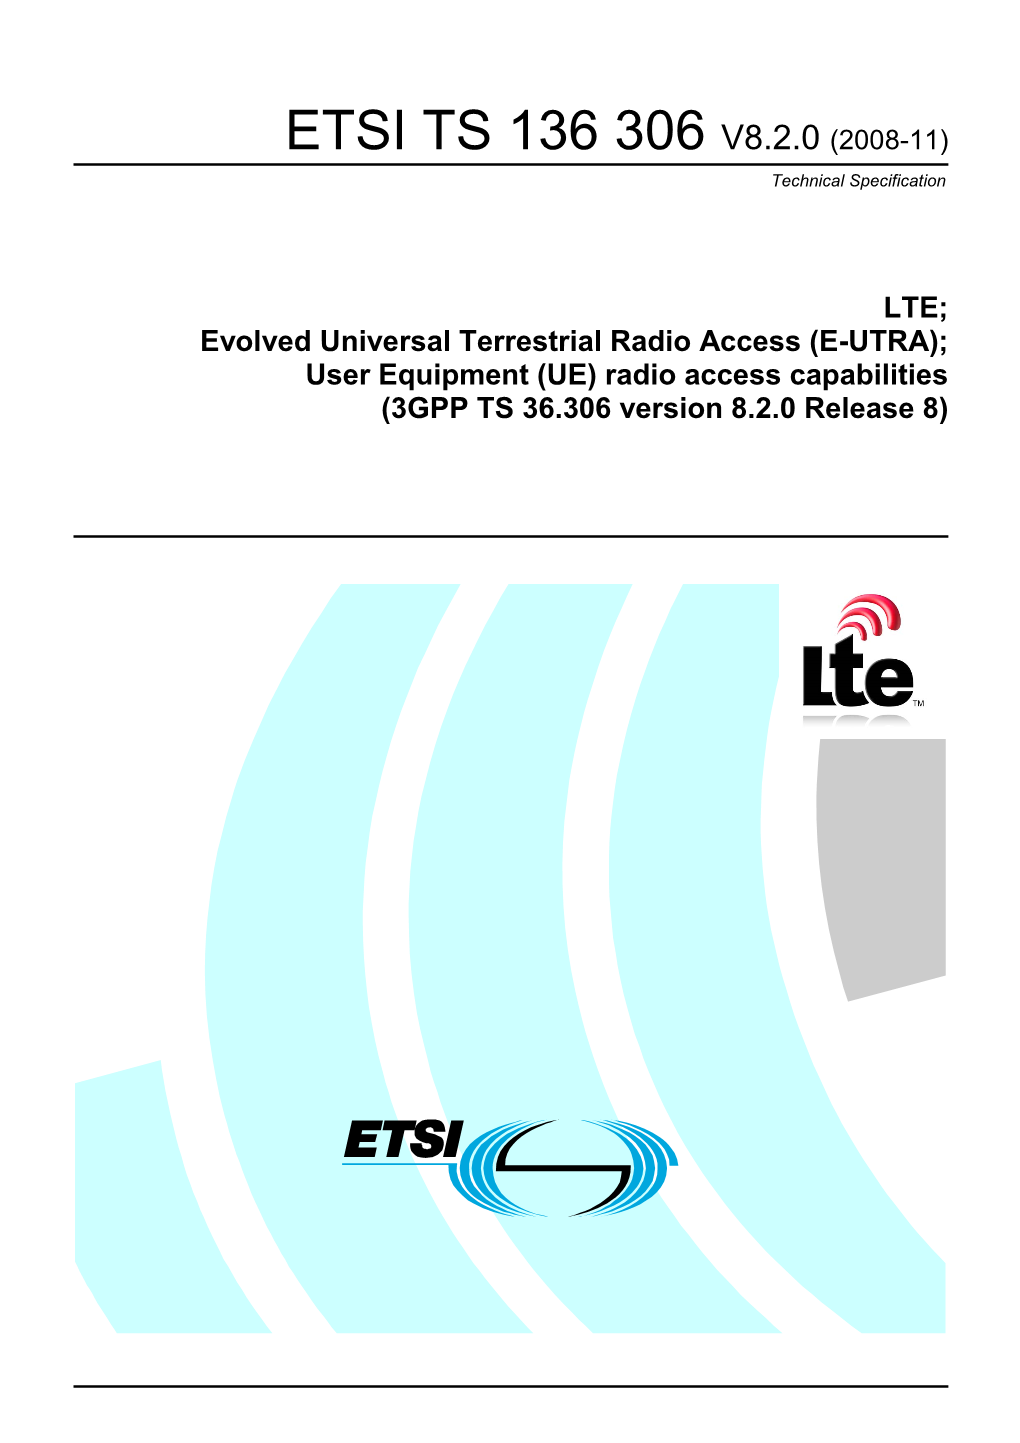 LTE; Evolved Universal Terrestrial Radio Access (E-UTRA); User Equipment (UE) Radio Access Capabilities (3GPP TS 36.306 Version 8.2.0 Release 8)